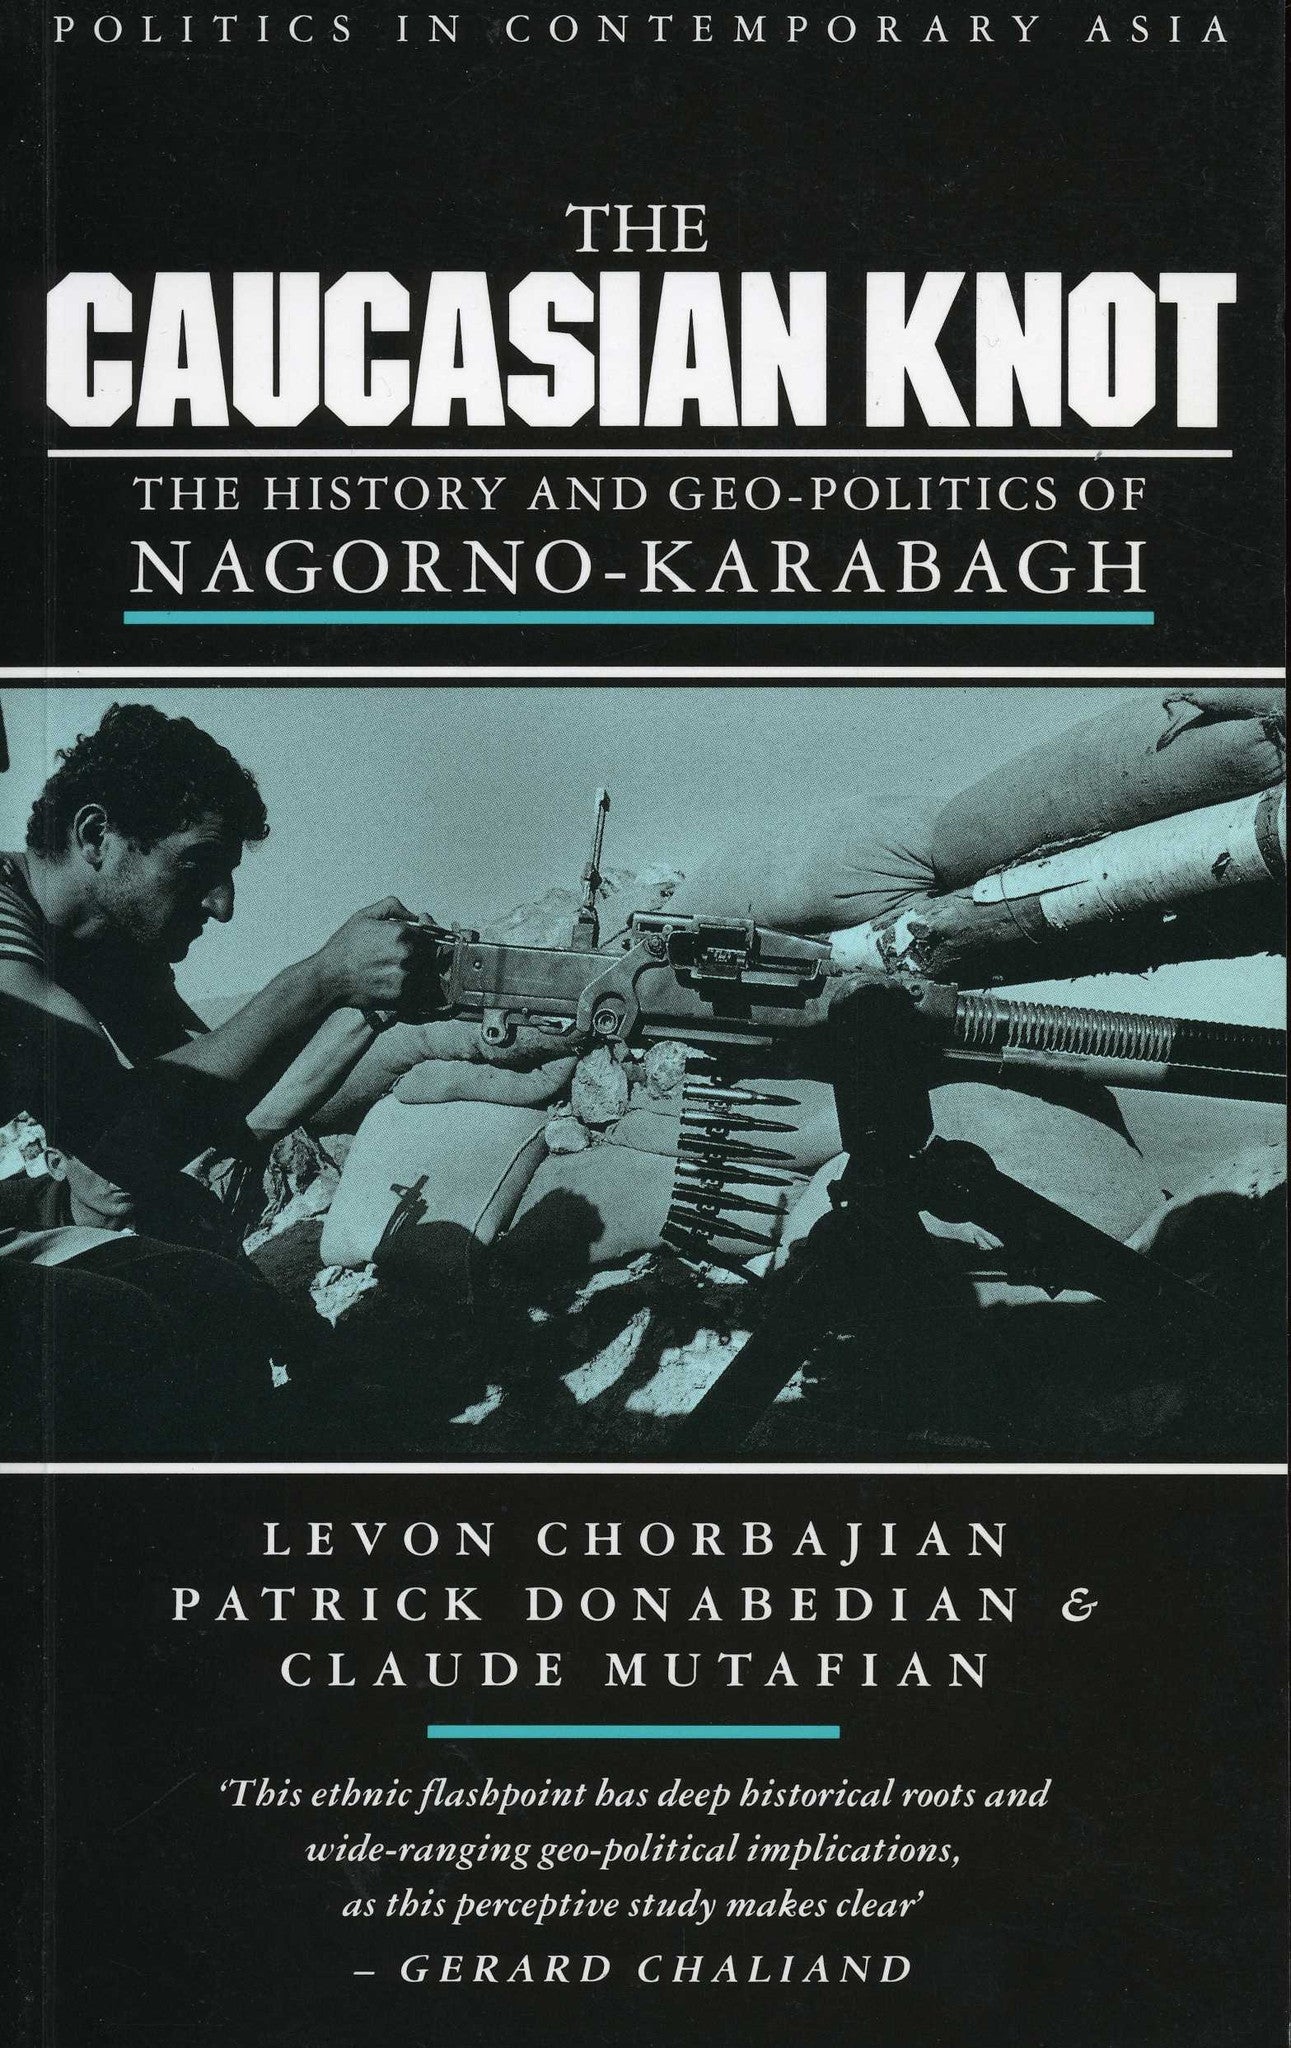 CAUCASIAN KNOT: THE HISTORY AND GEO-POLITICS OF NAGORNO KARABAGH